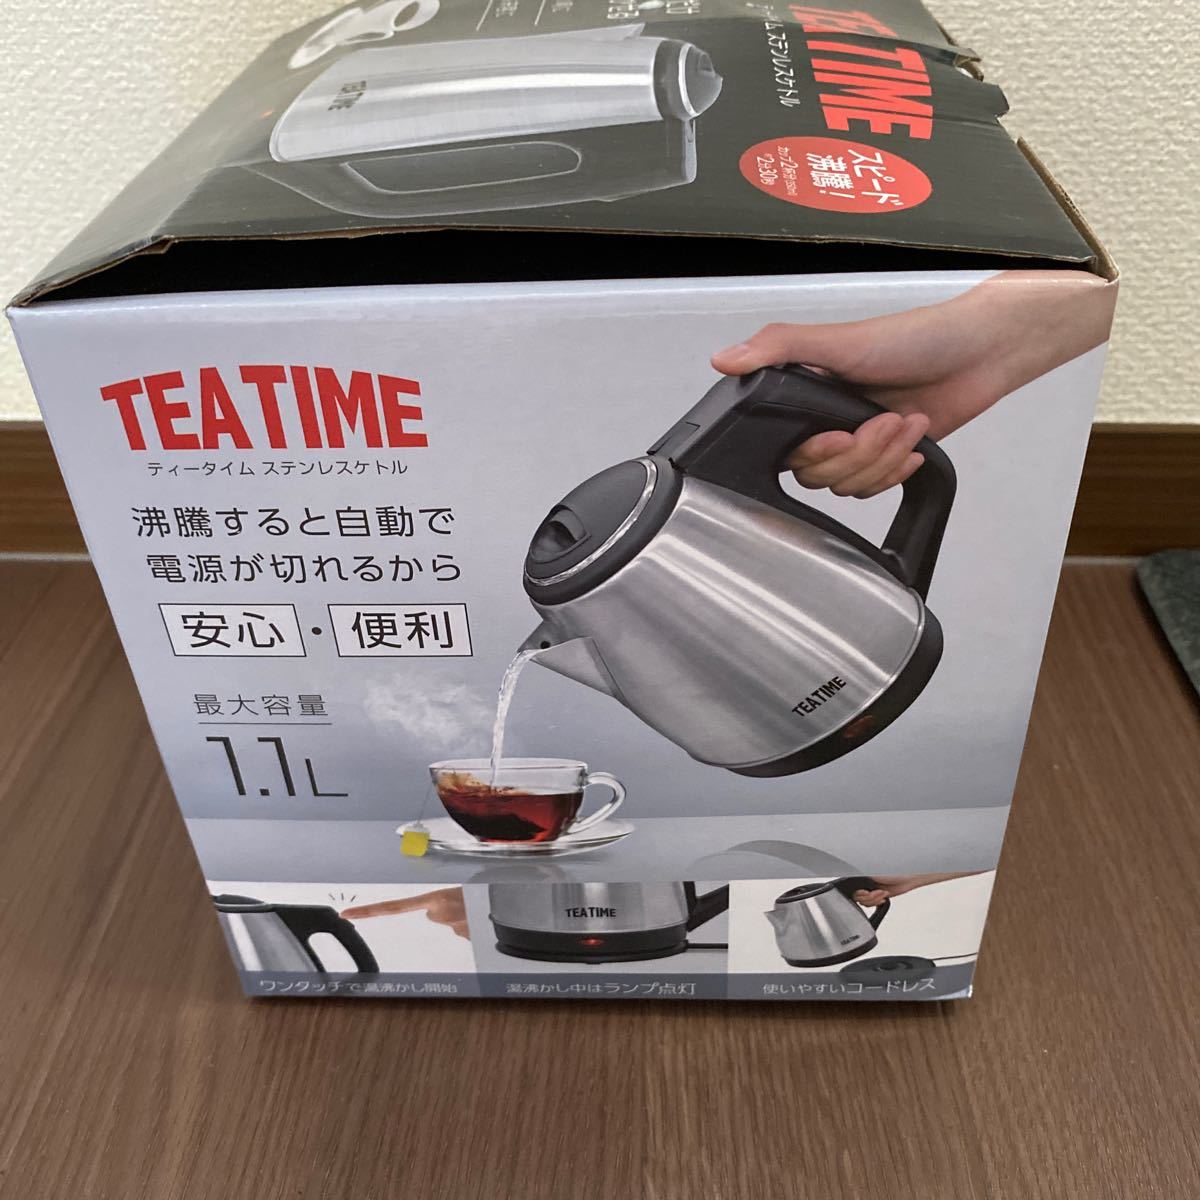 Tea time ステンレスケトル 開封後未使用品